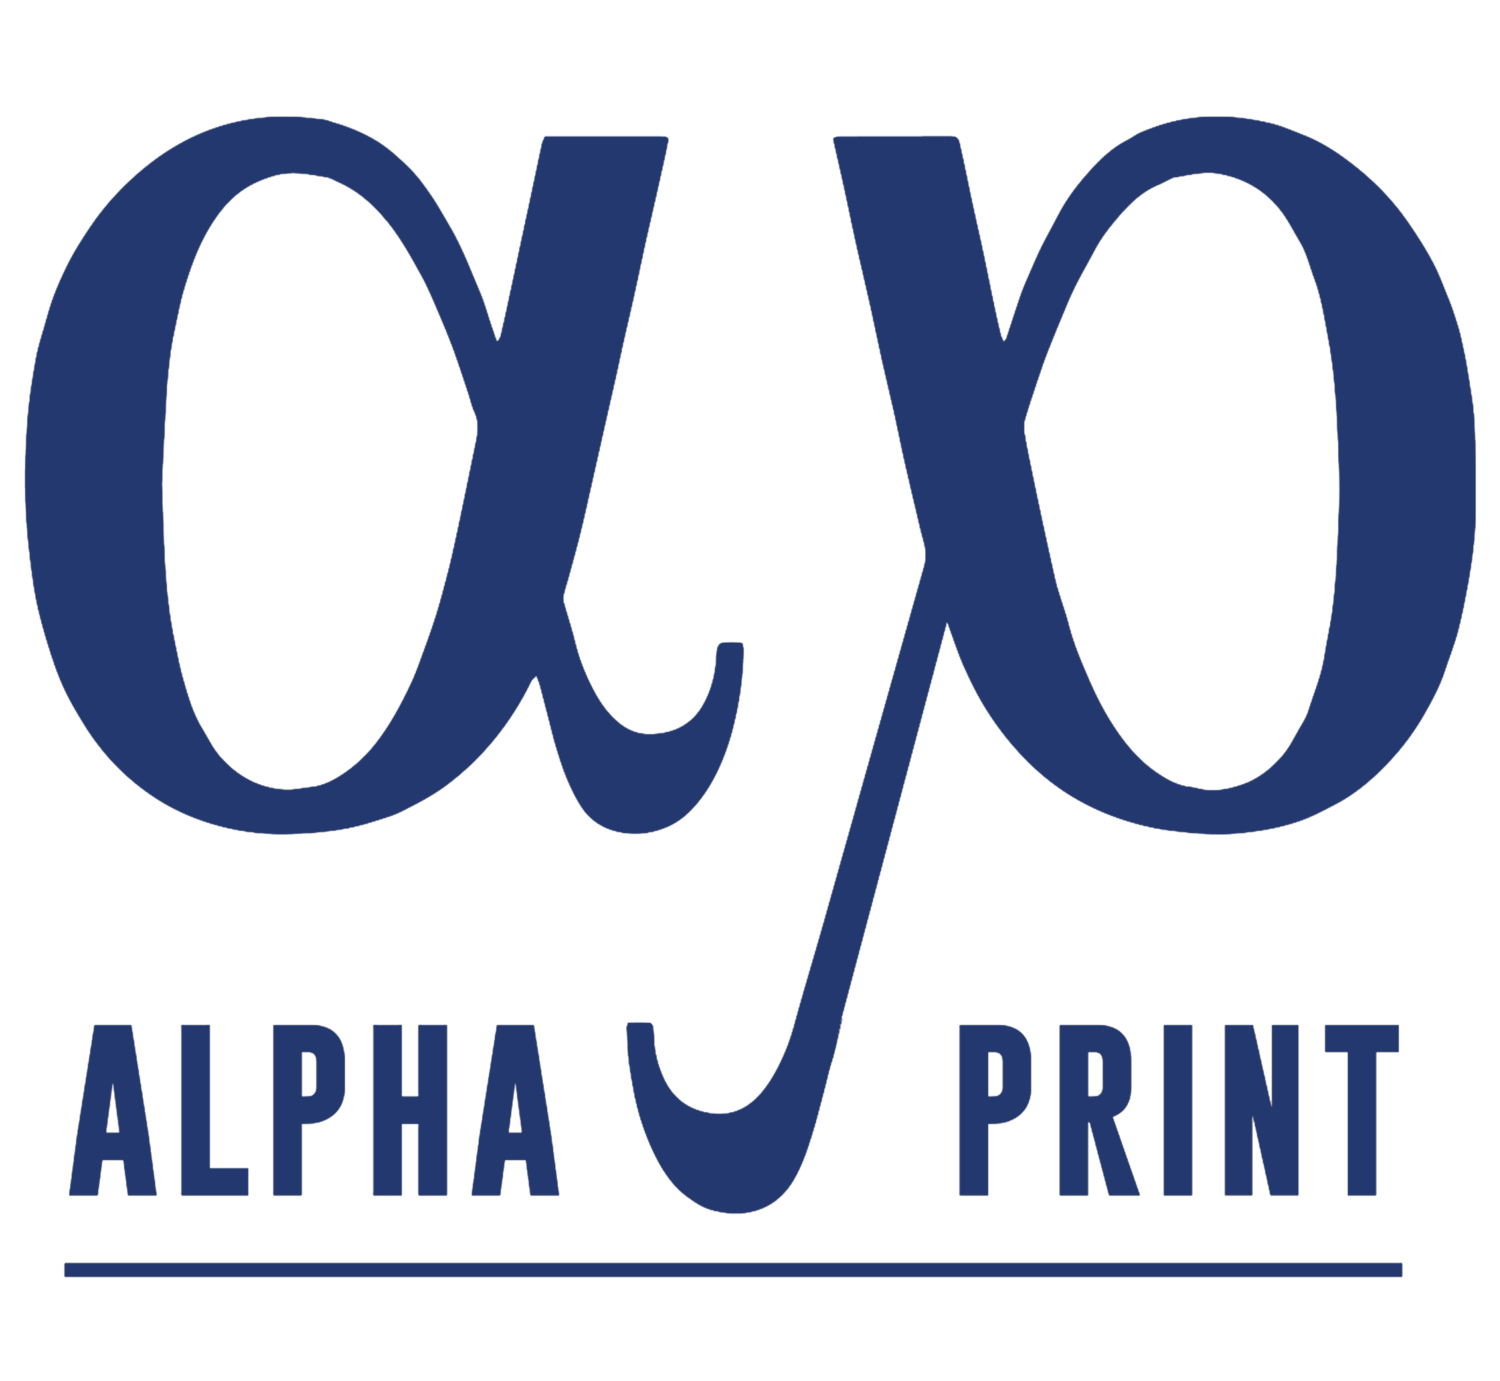 Contact — Alpha Print